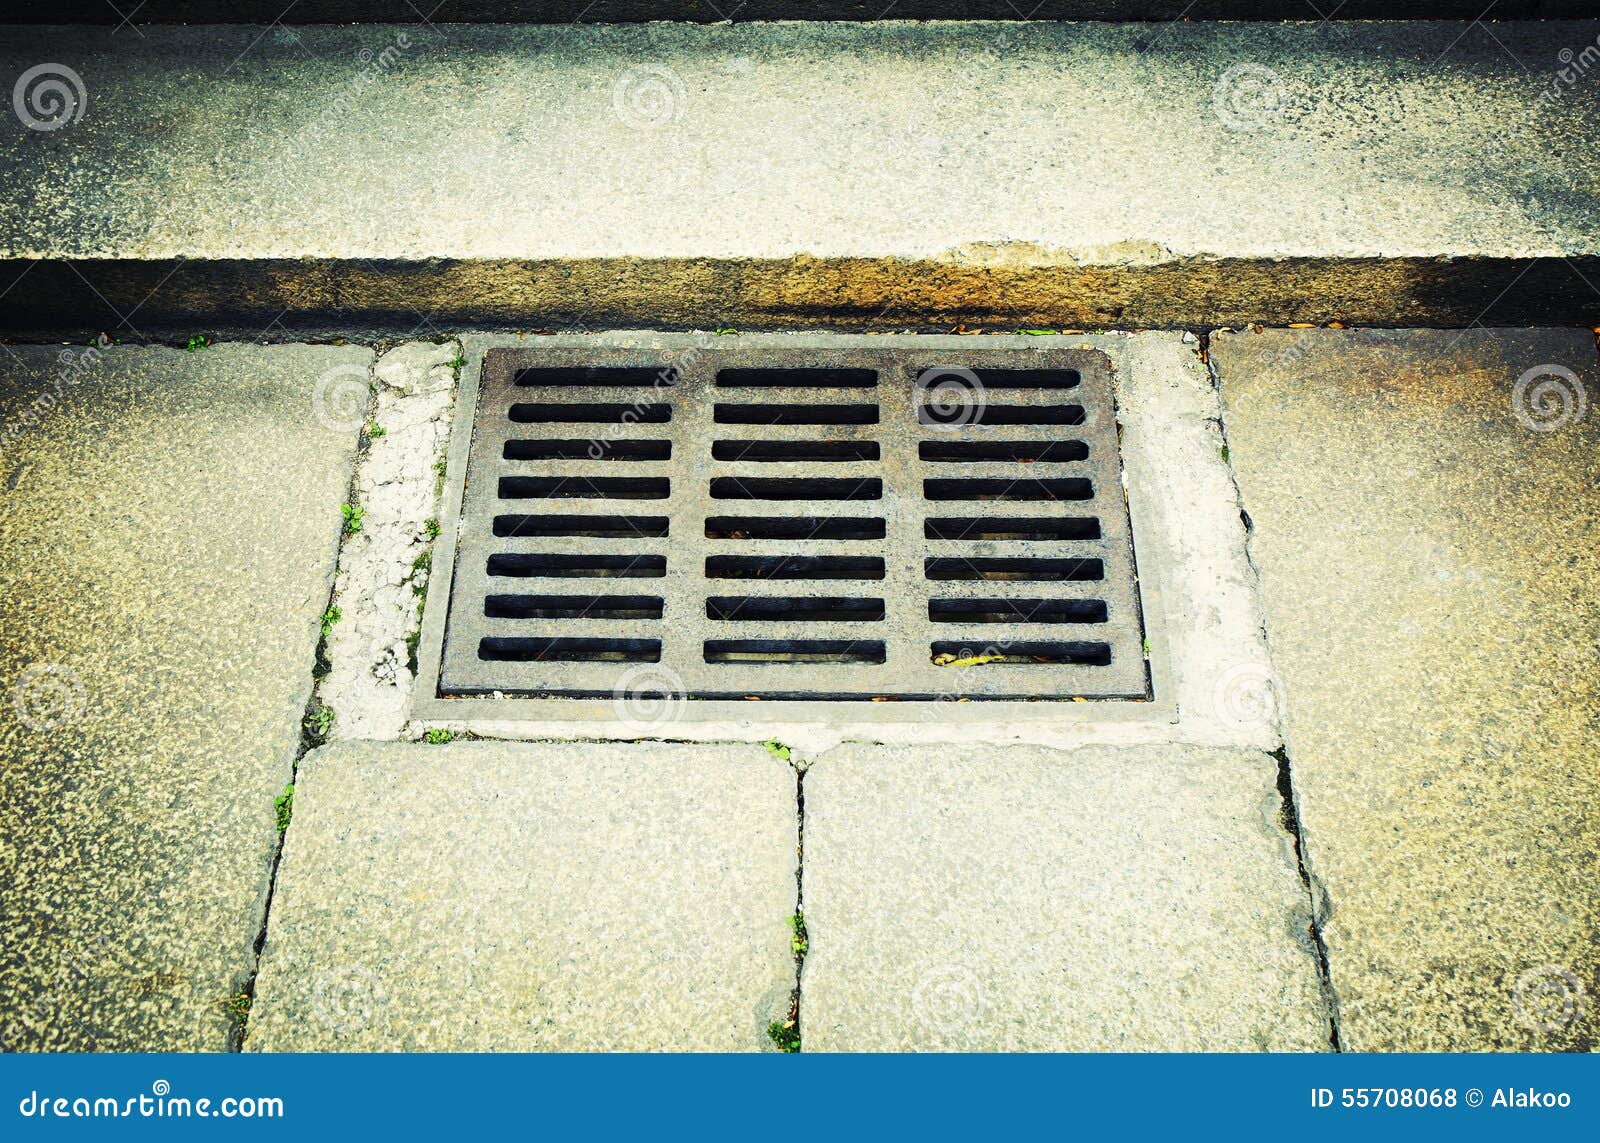 street drain sewer